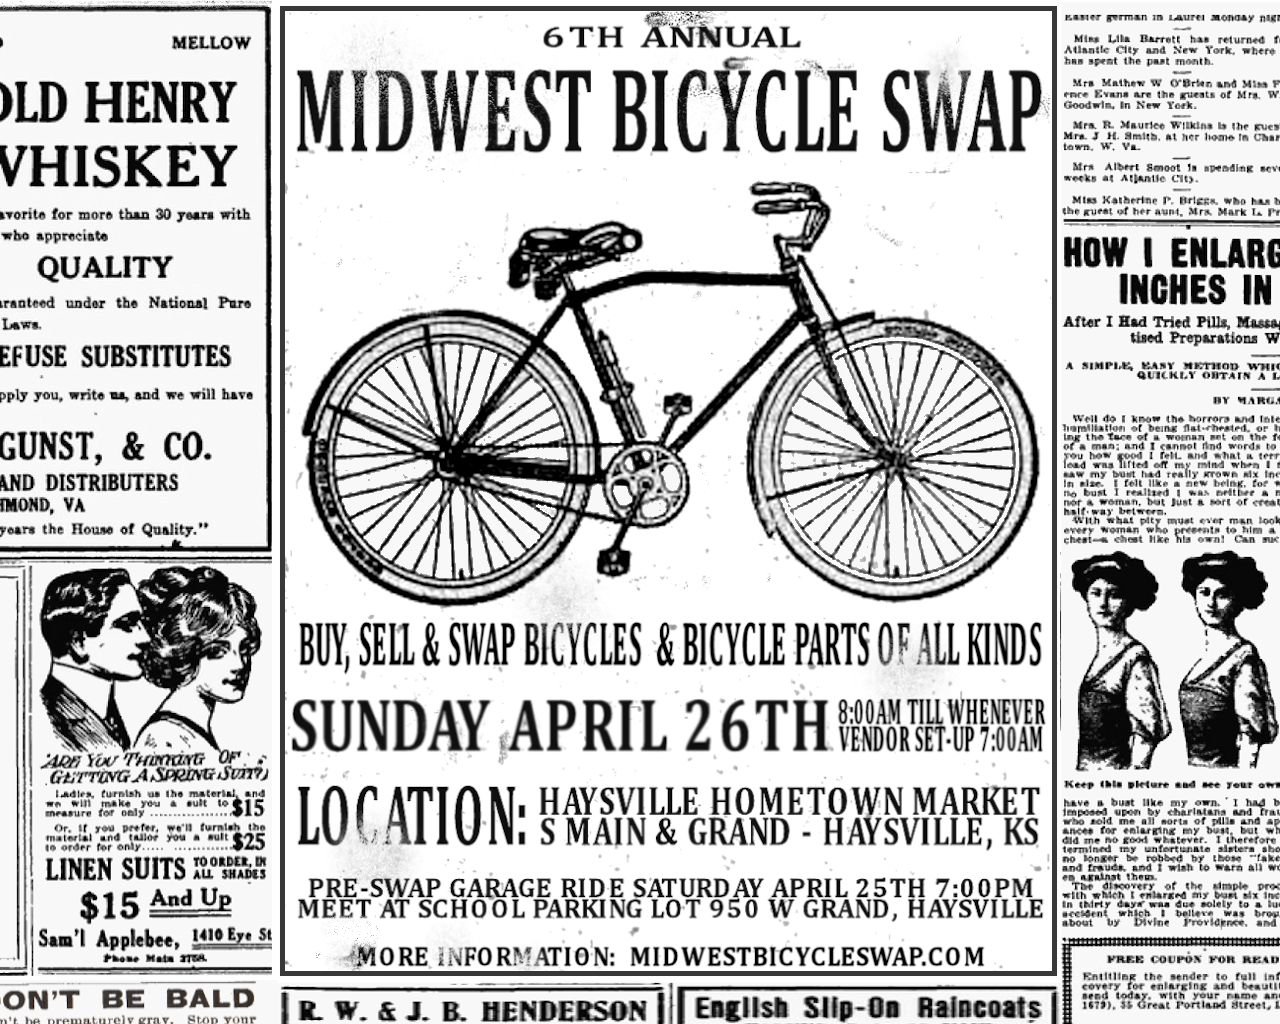 2015_midwest_bicycle_swap_poster.jpg